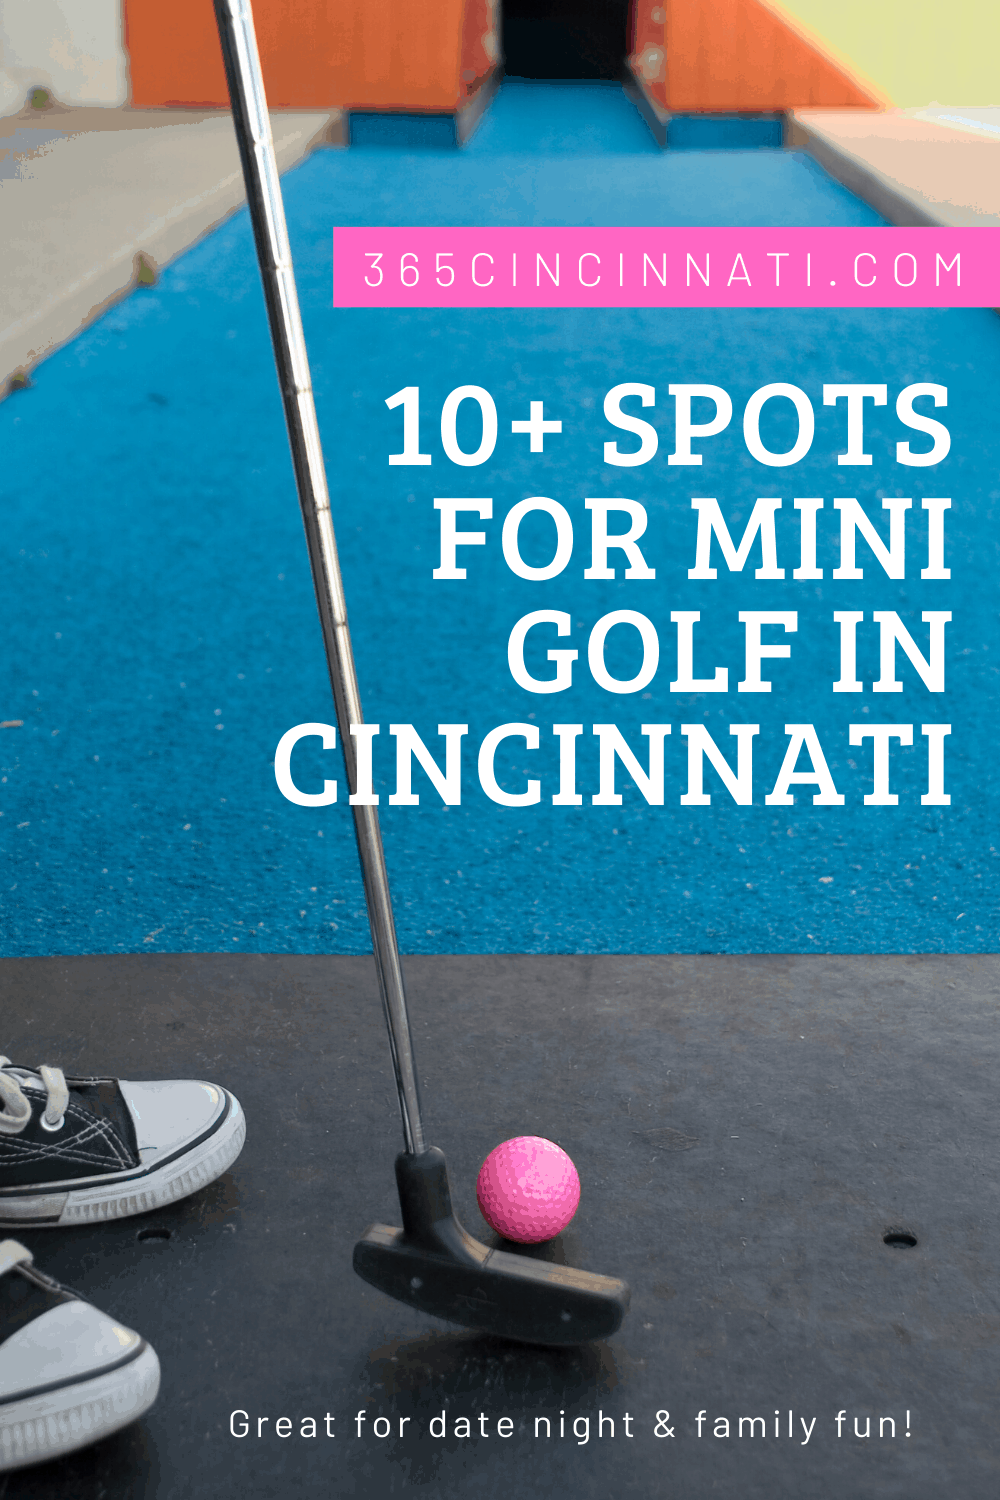 Mini Golf in Cincinnati graphic